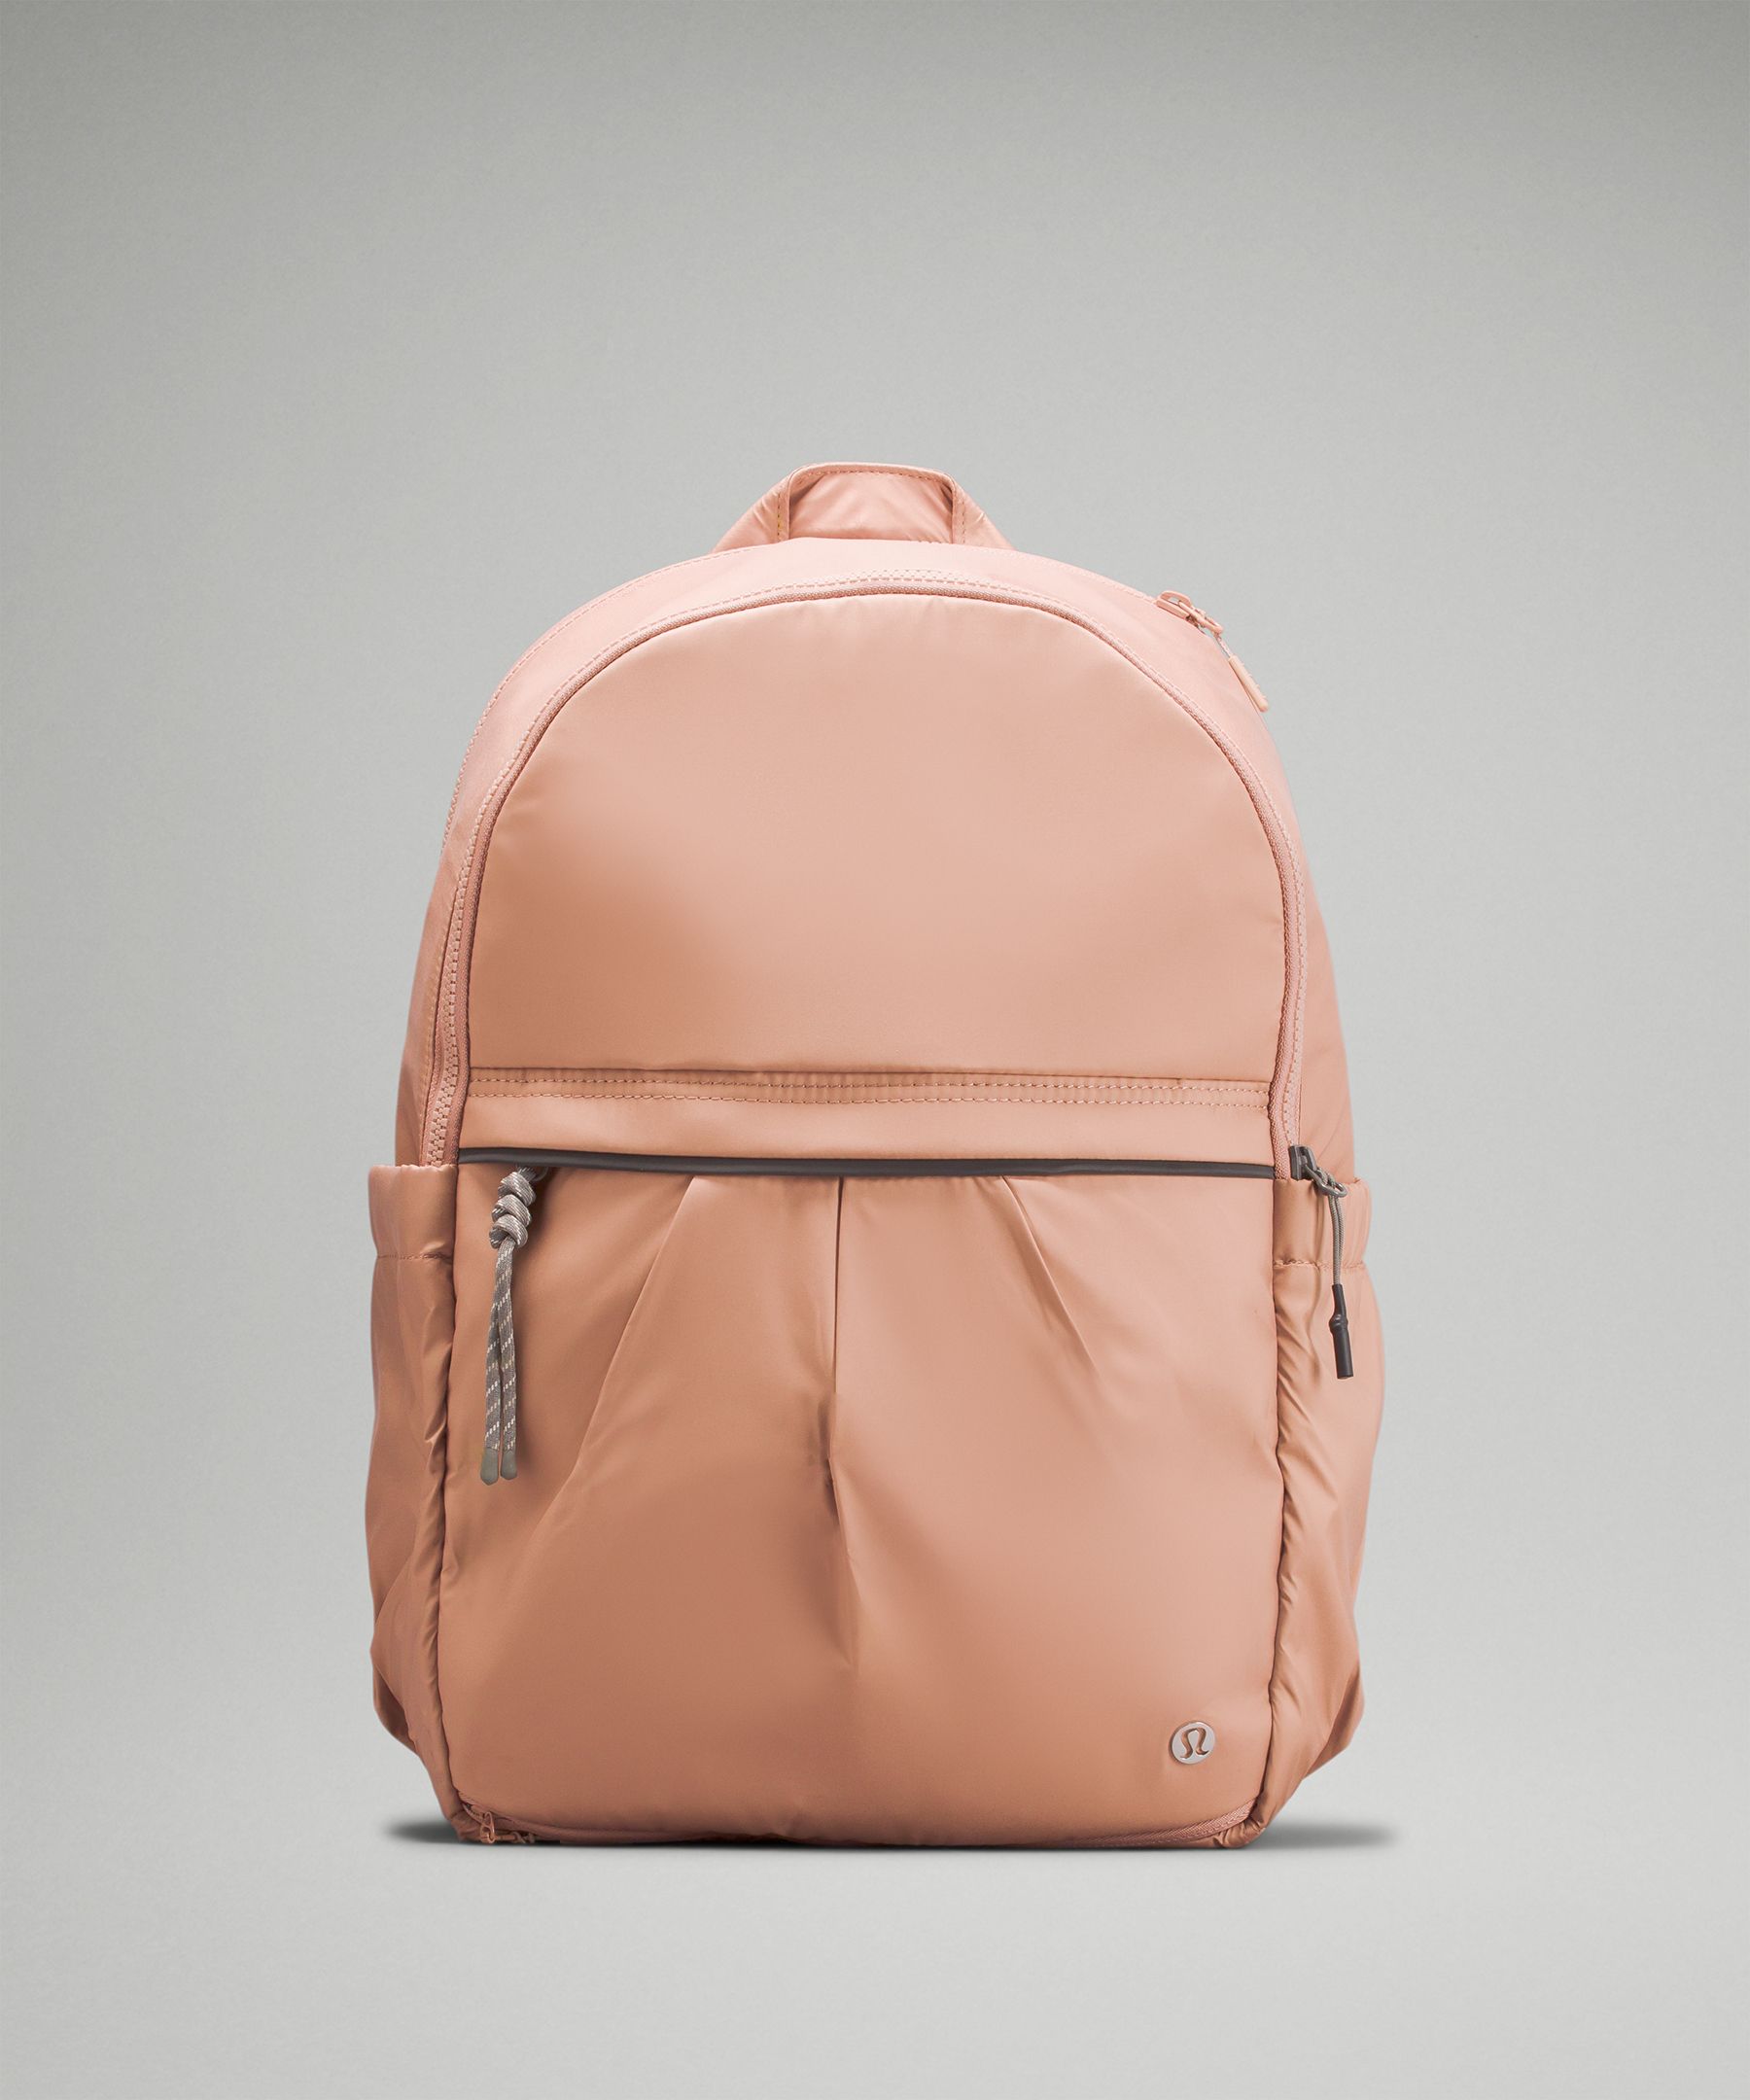 Lululemon Pack It Up Backpack 21l In Pink